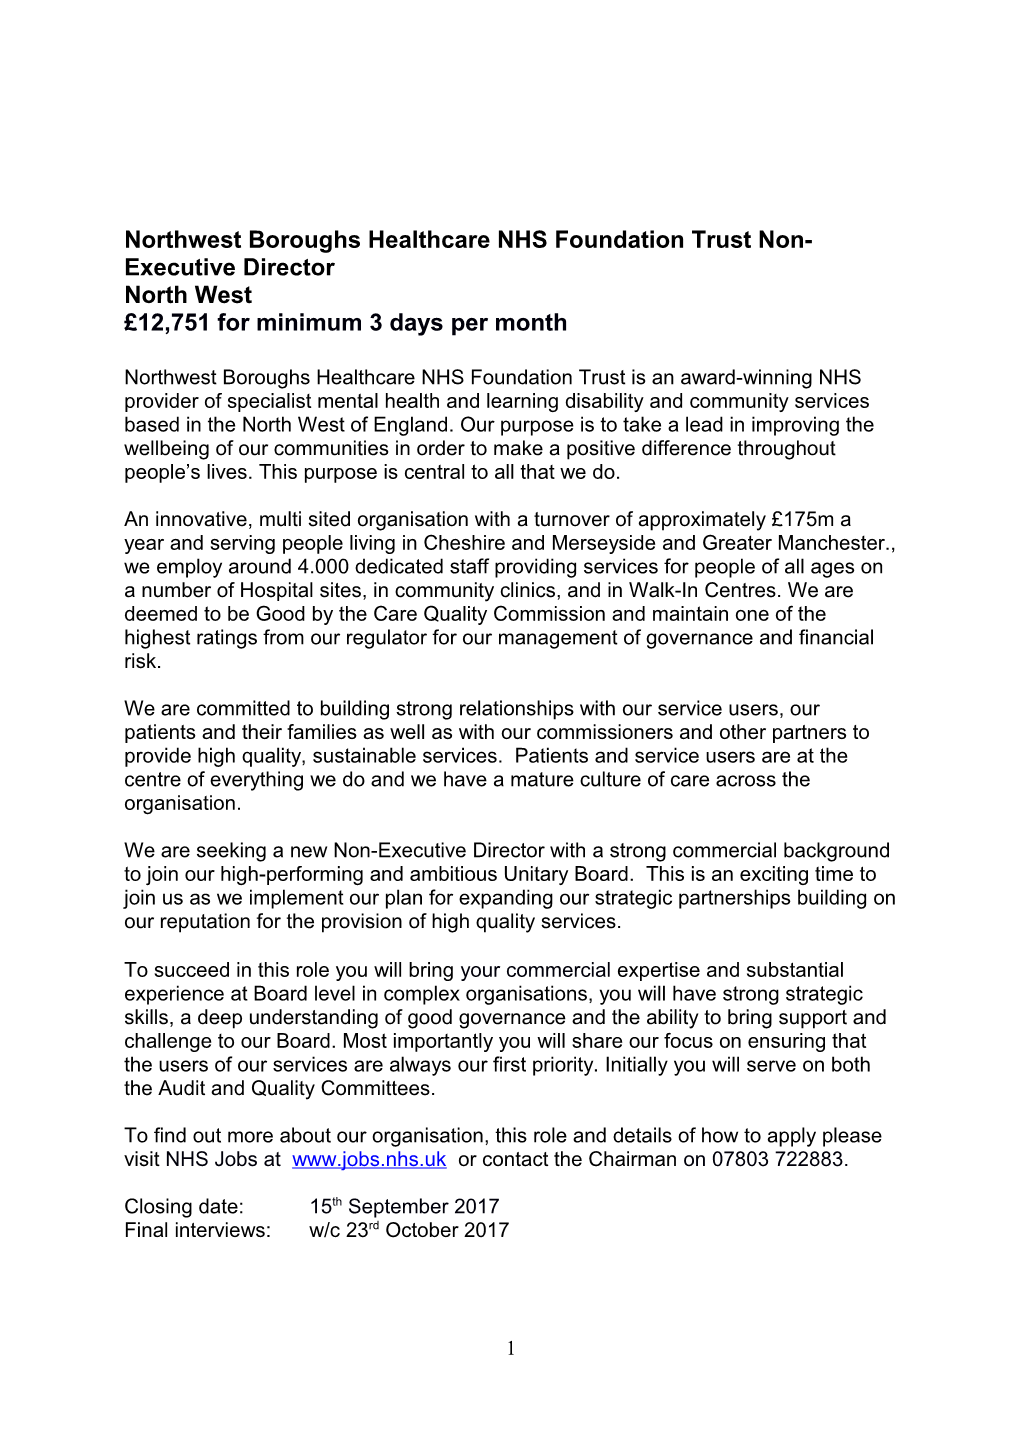 Northwest Boroughs Healthcare NHS Foundation Trust Non-Executive Director